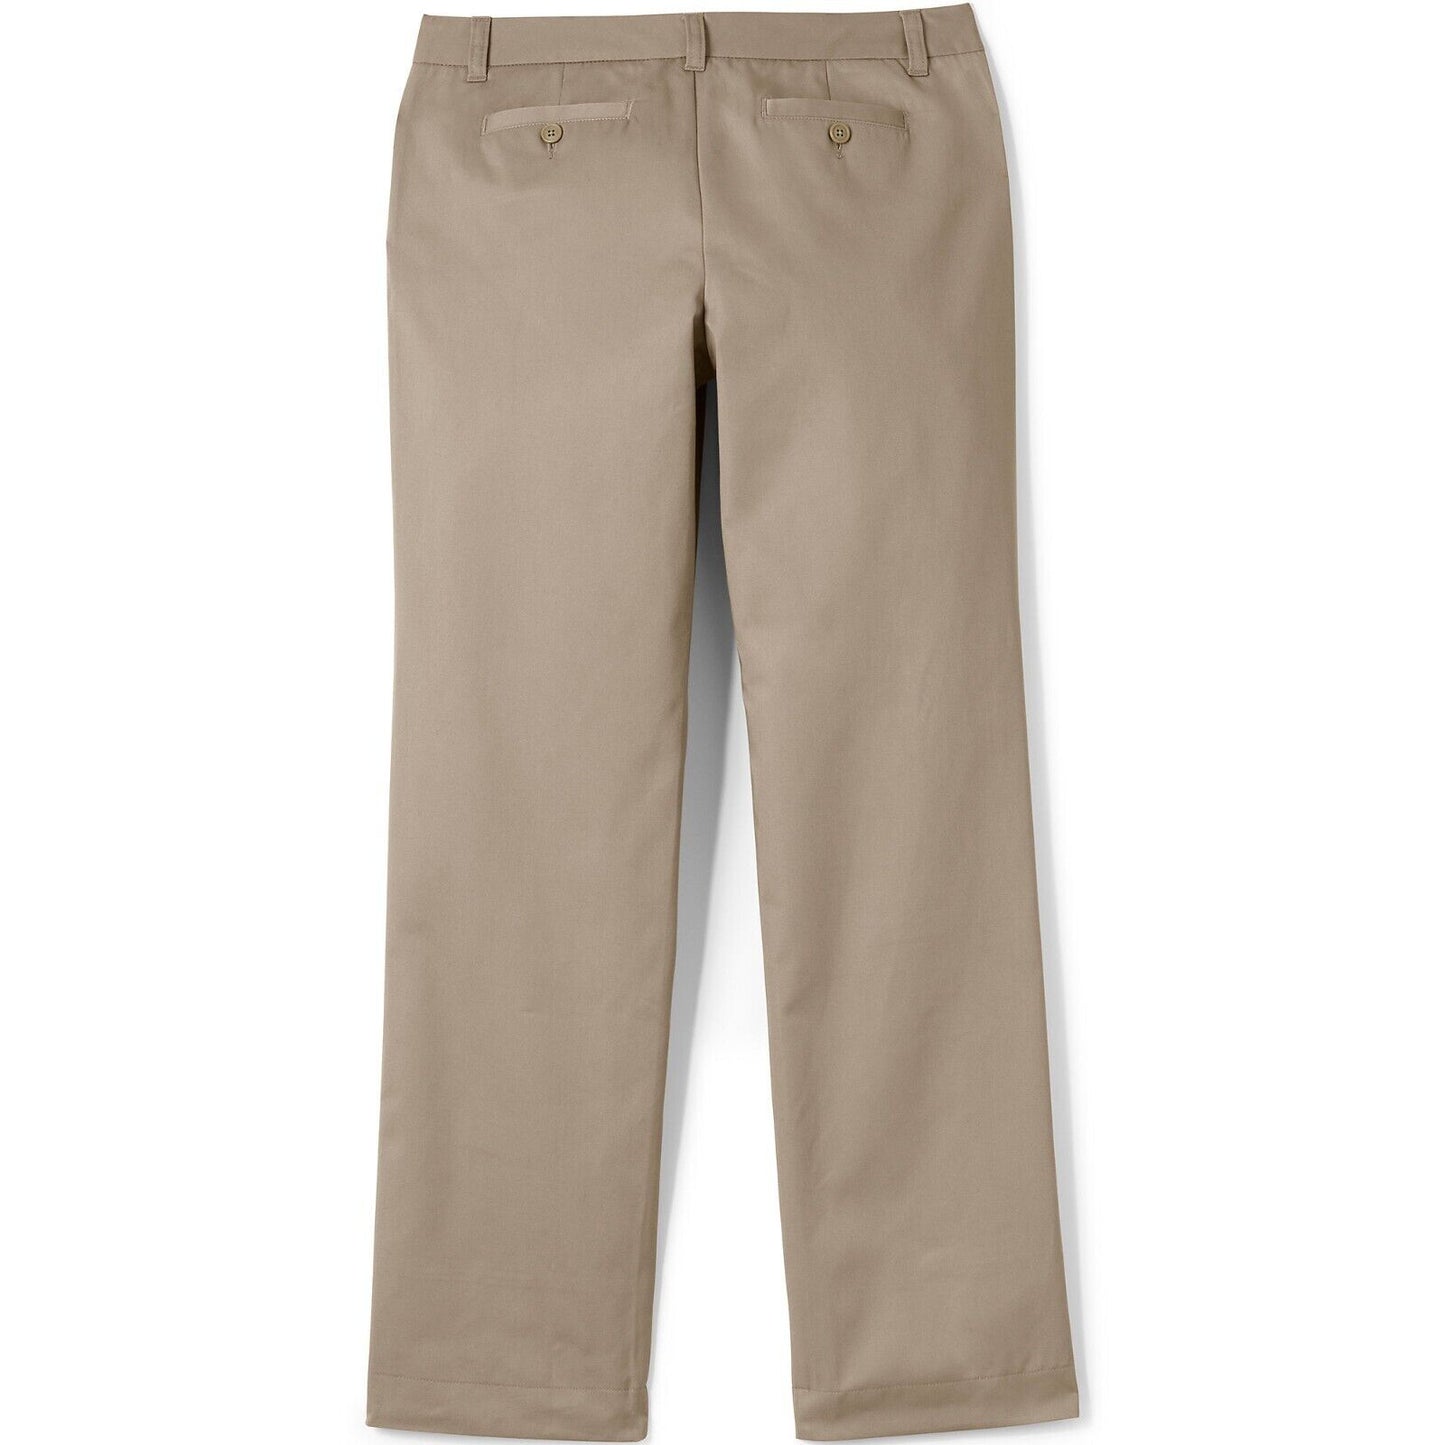 Womens Plain Front Blend Chino Pants size 6